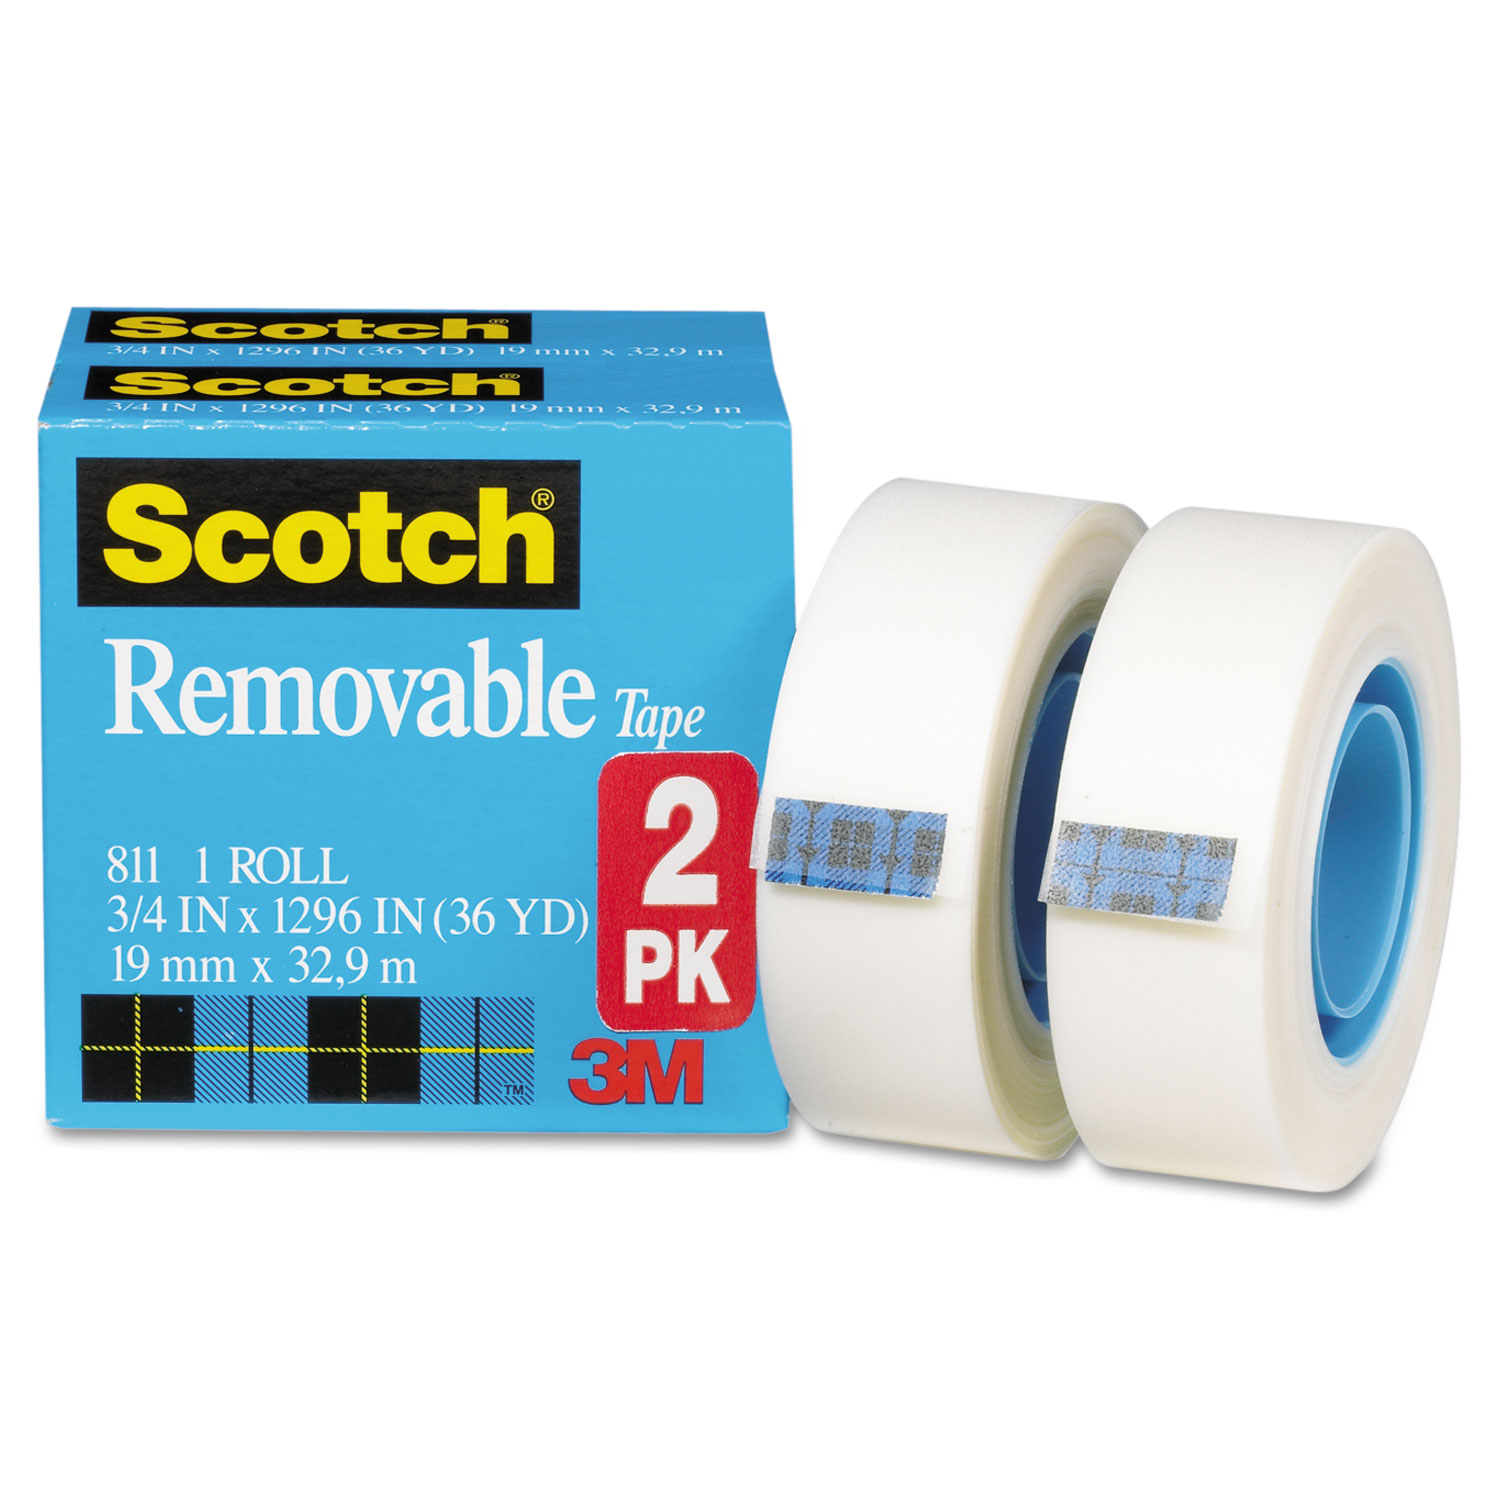 Removable Tape 811 2PK, 3/4 x 1296, 1 Core, Transparent, 2/Pack